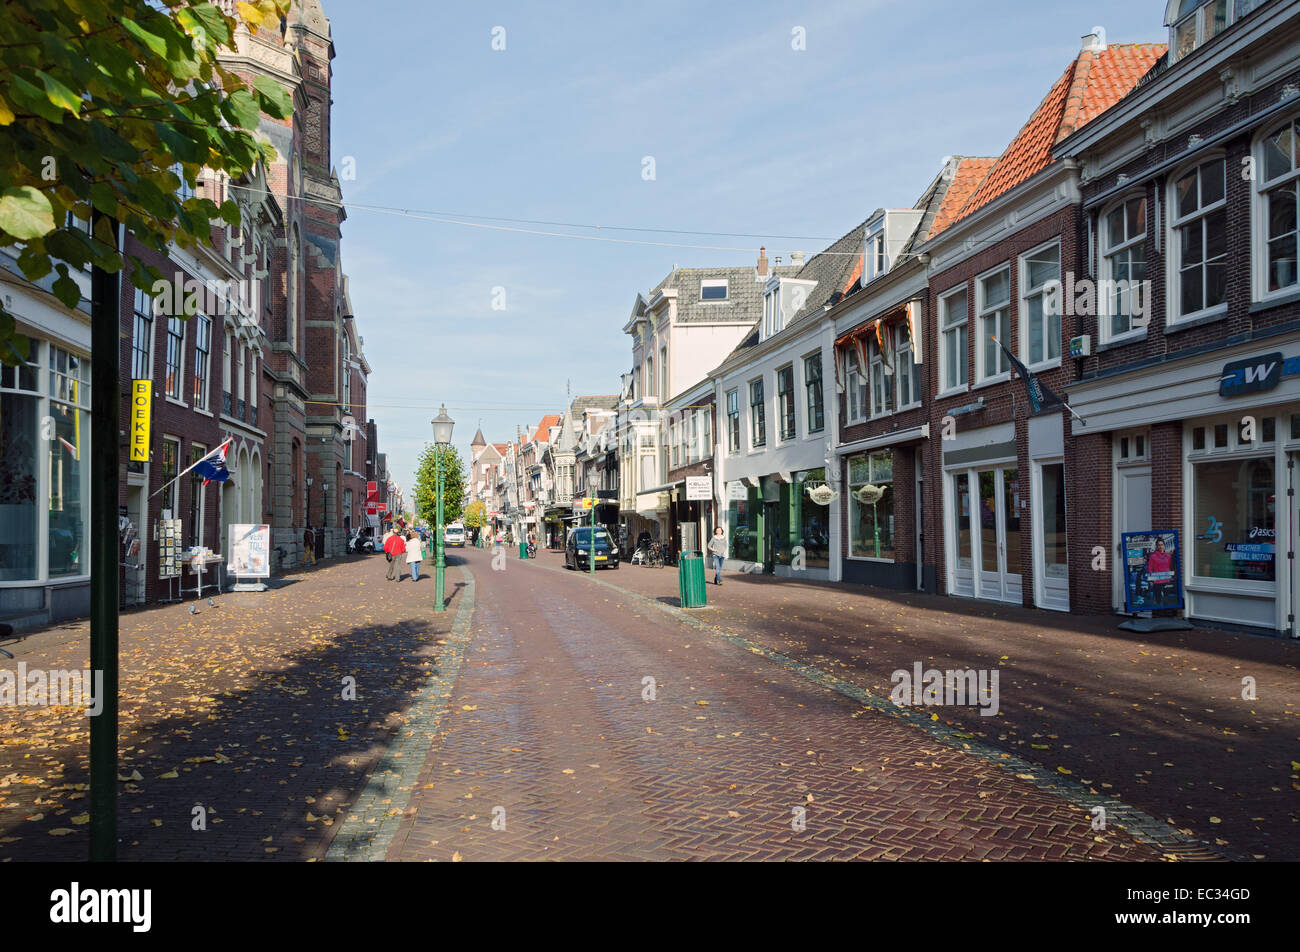 HOORN, Paesi Bassi - 22 ottobre: Tipica architettura olandese su ottobre 22, 2013 in Hoorn, Paesi Bassi Foto Stock